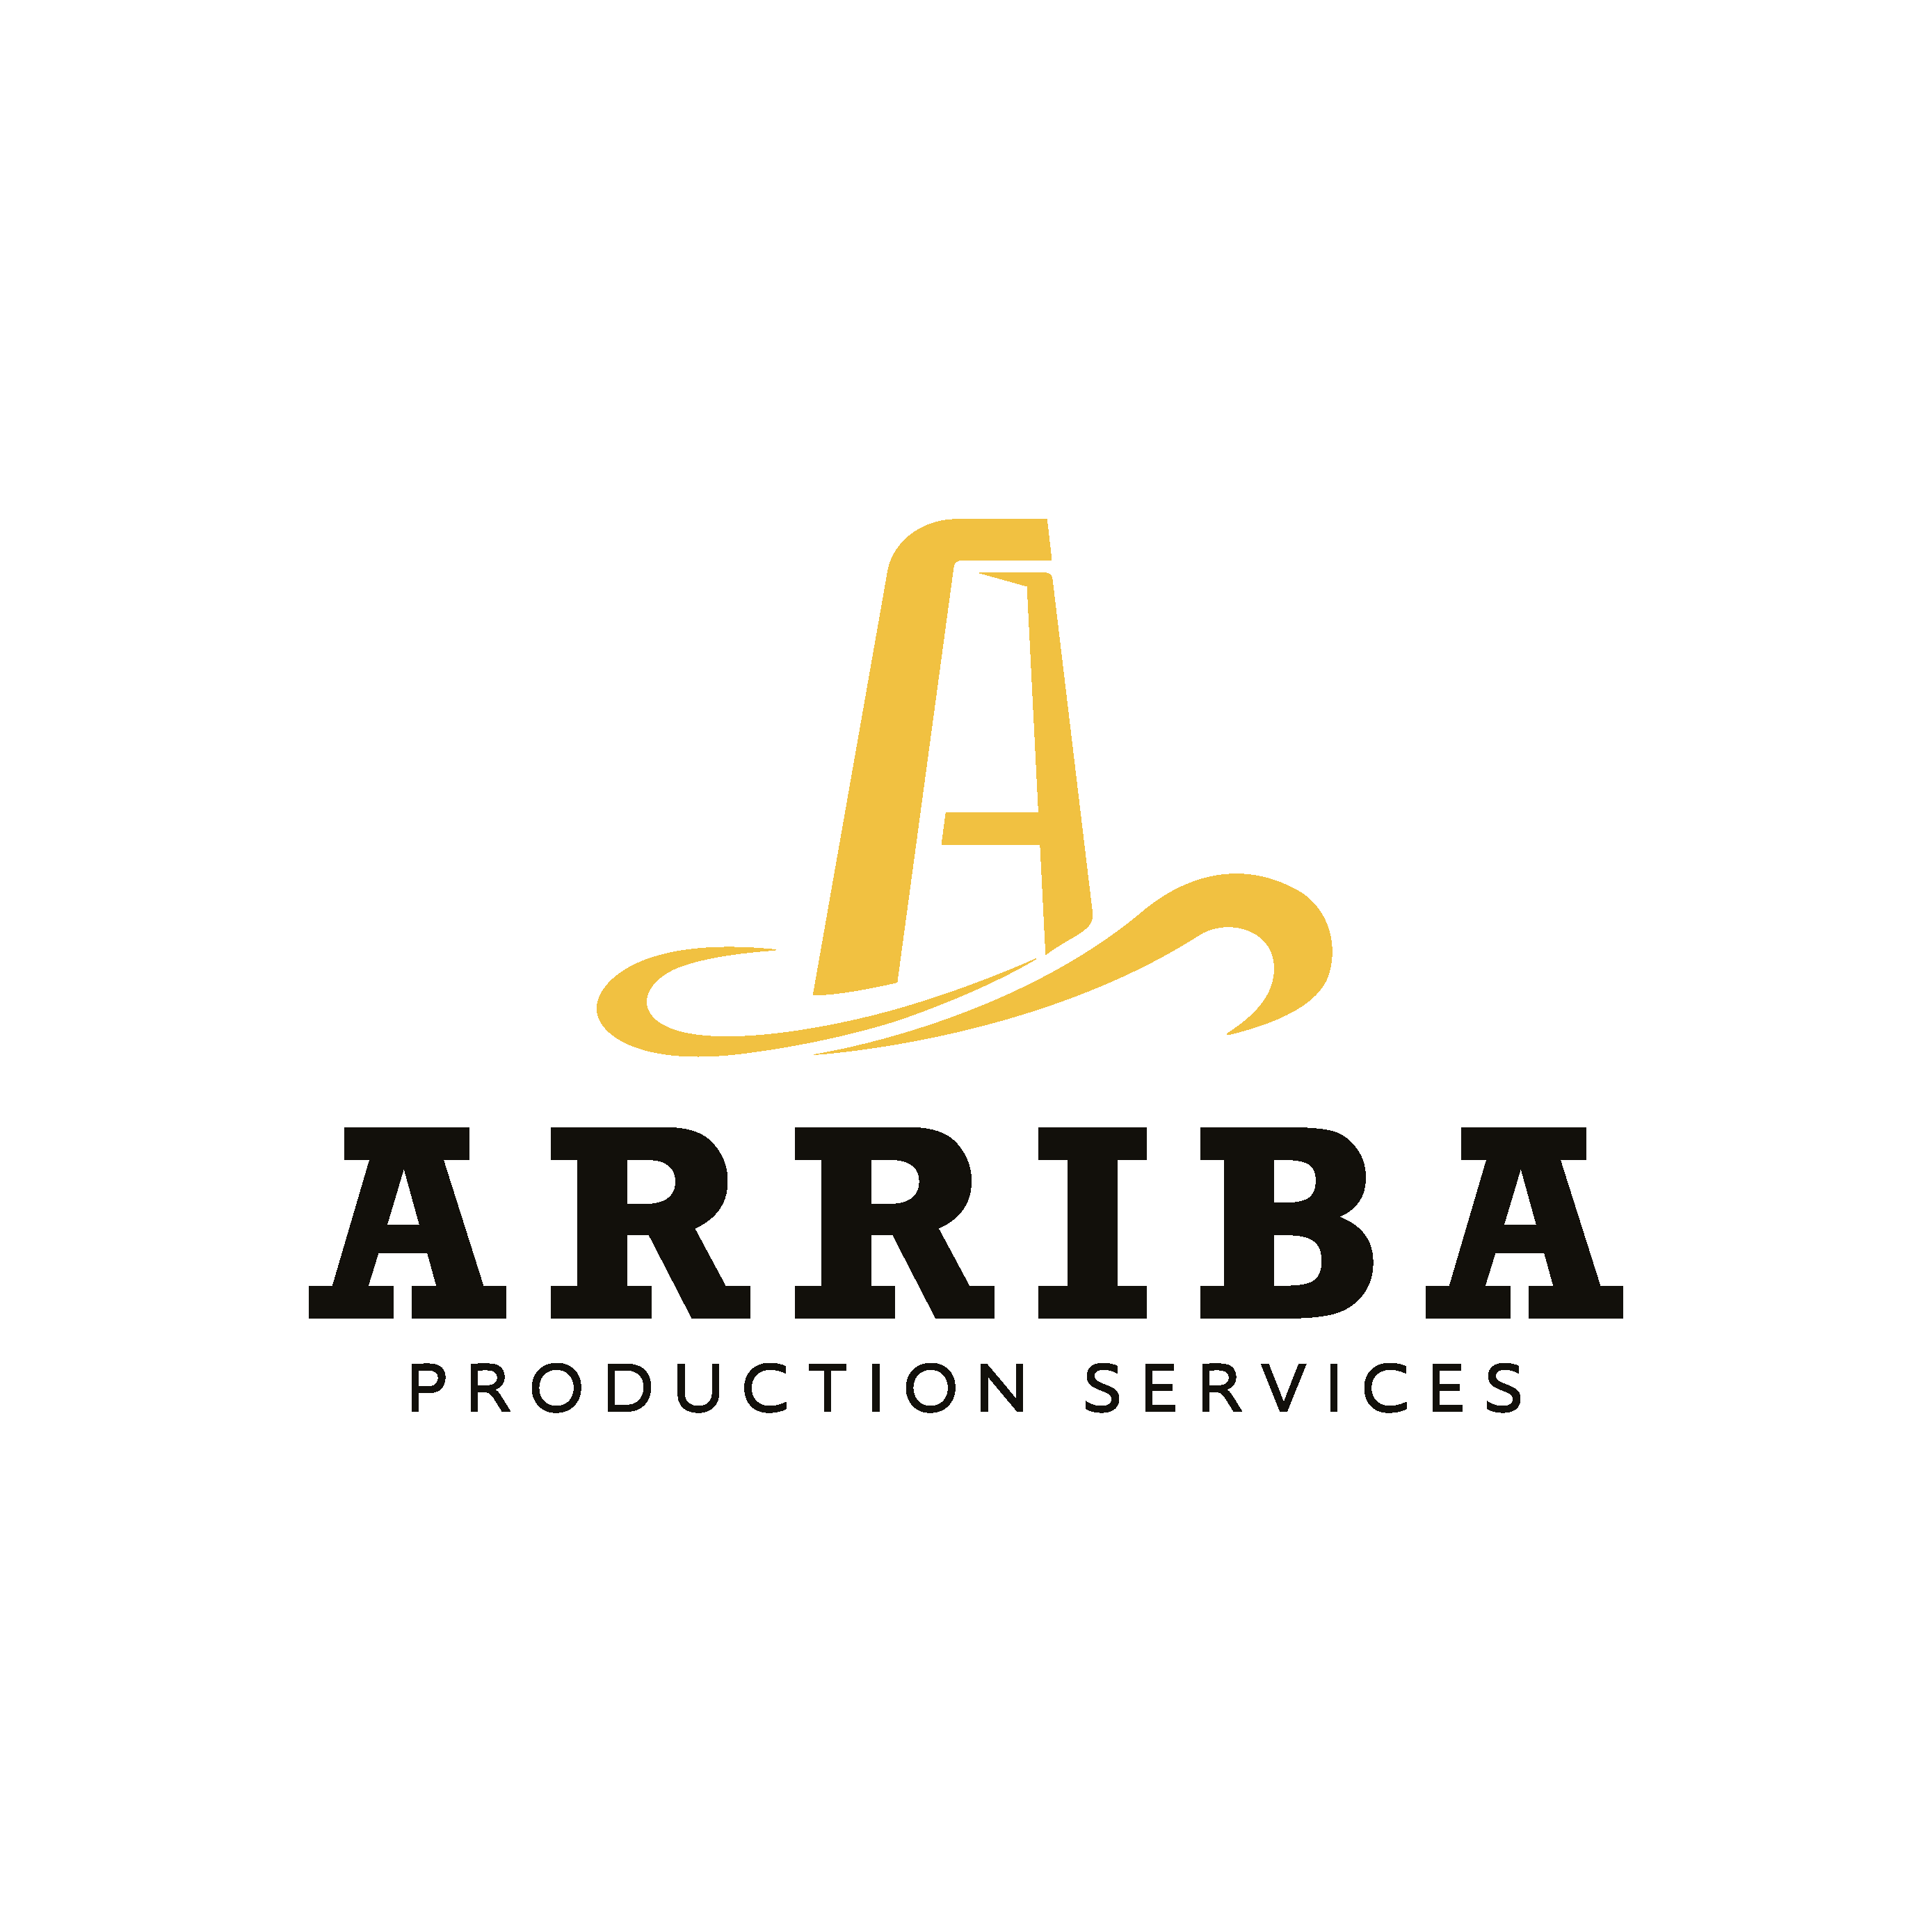 Arriba Production Services